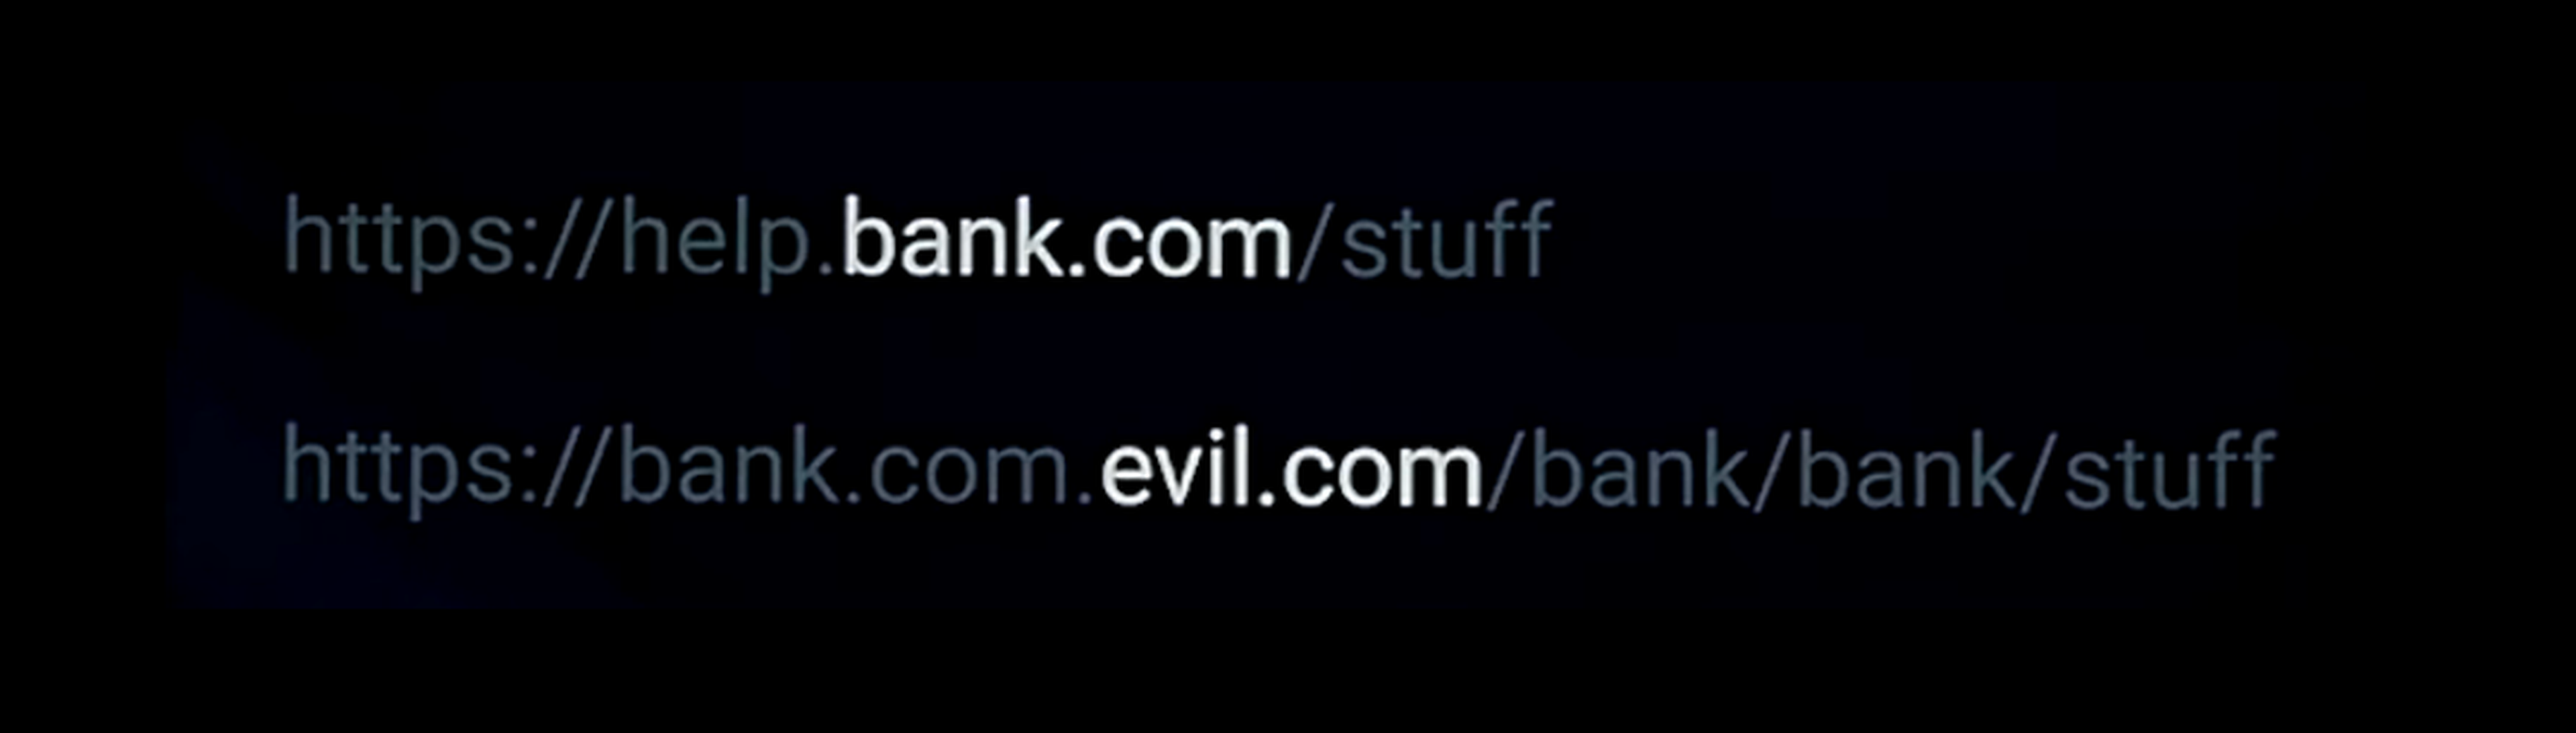 Ejemplo de phishing en webs de bancos